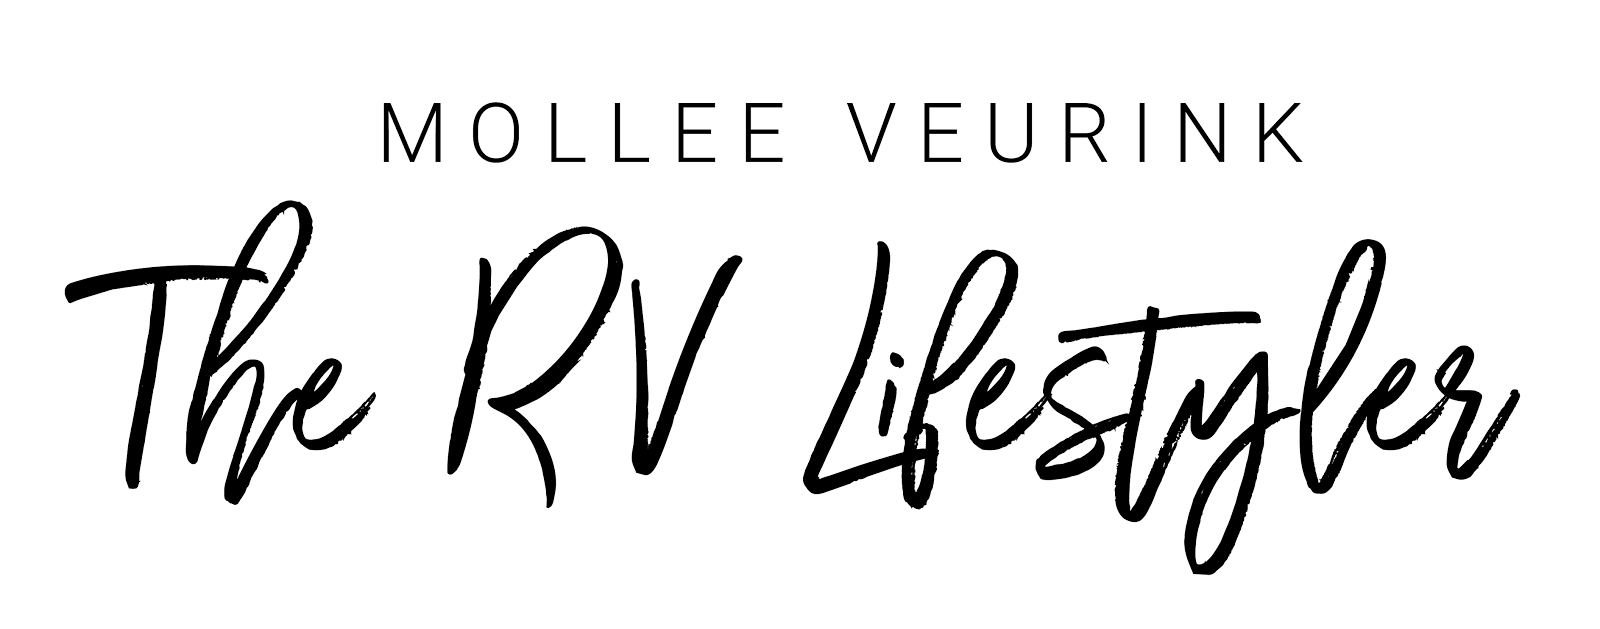 RV Lifestyler: Mollee Veurink